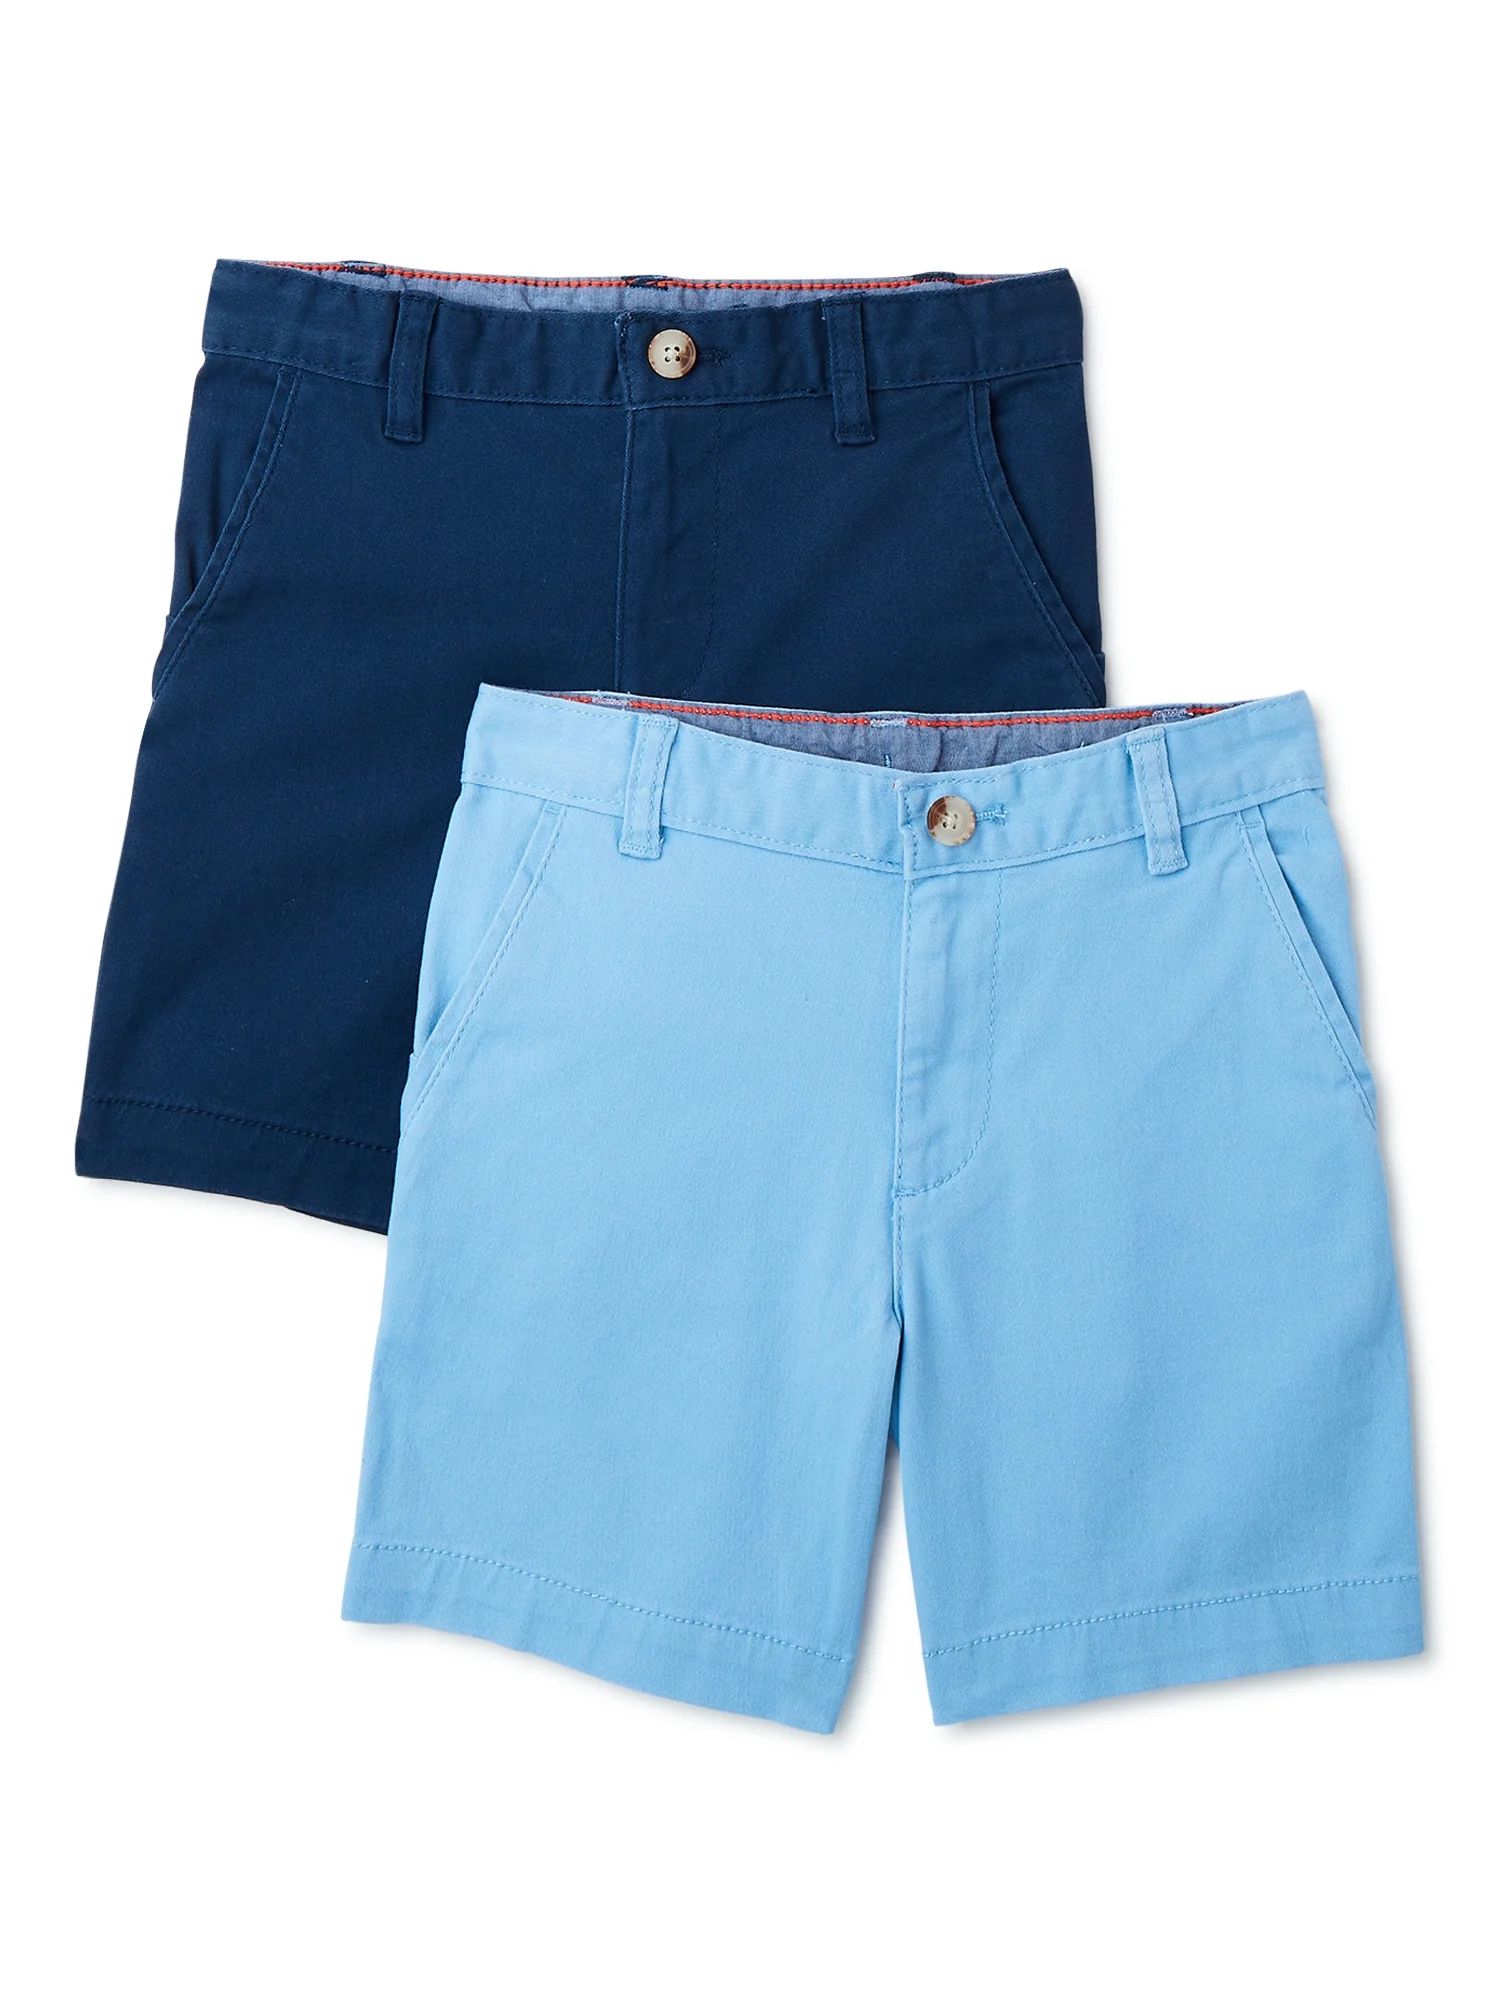 Wonder Nation Boys Flat Front Shorts, 2-Pack, Sizes 4-18 & Husky | Walmart (US)